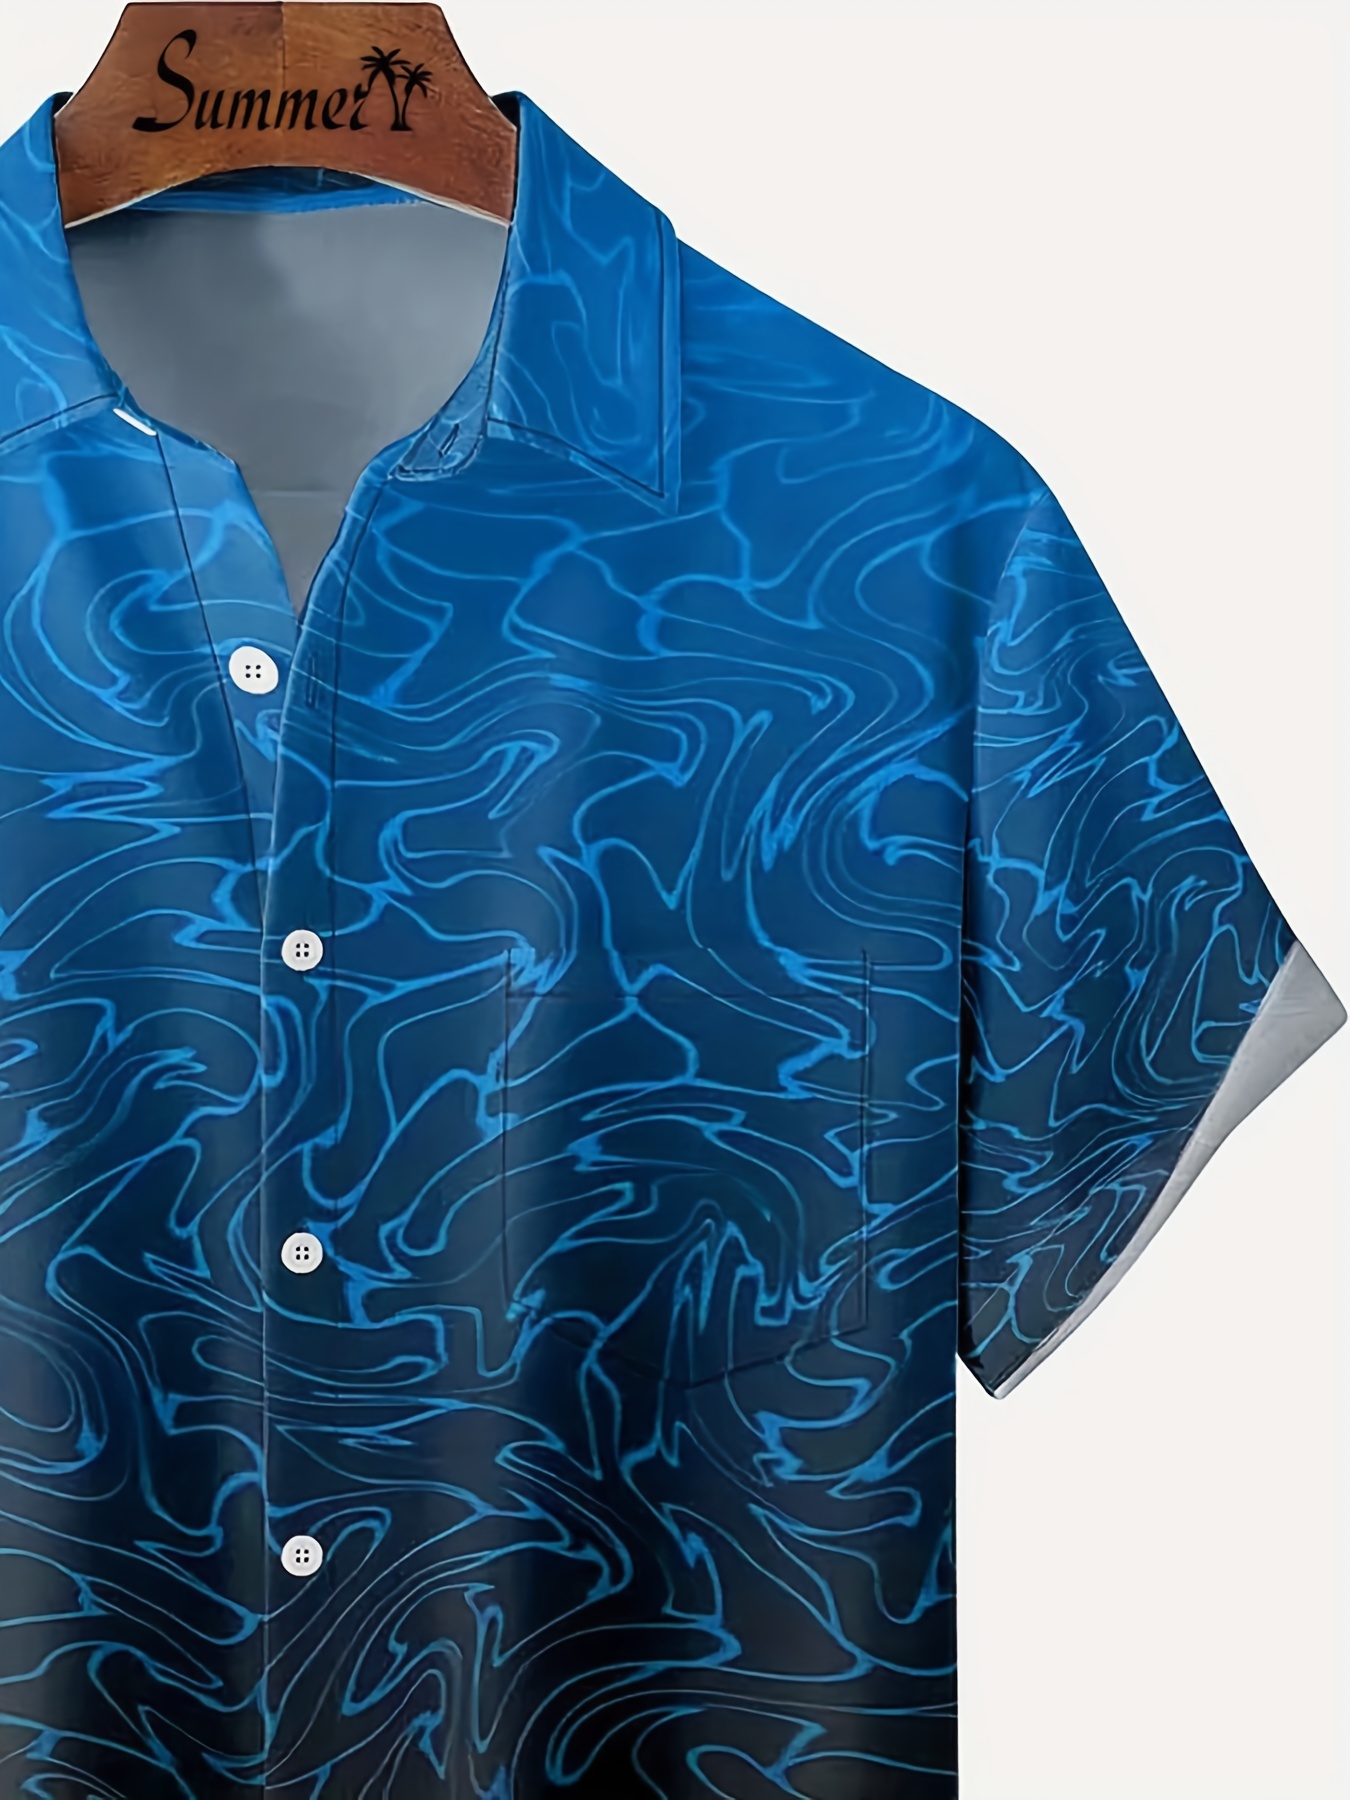  LONGZUVS Mens Hawaiian Shirt Gradient/Stripe Print Tank Top  Sports Sleeveless T-Shirt Casual Short Sleeve Beach Summer Shirts : ביגוד,  נעליים ותכשיטים